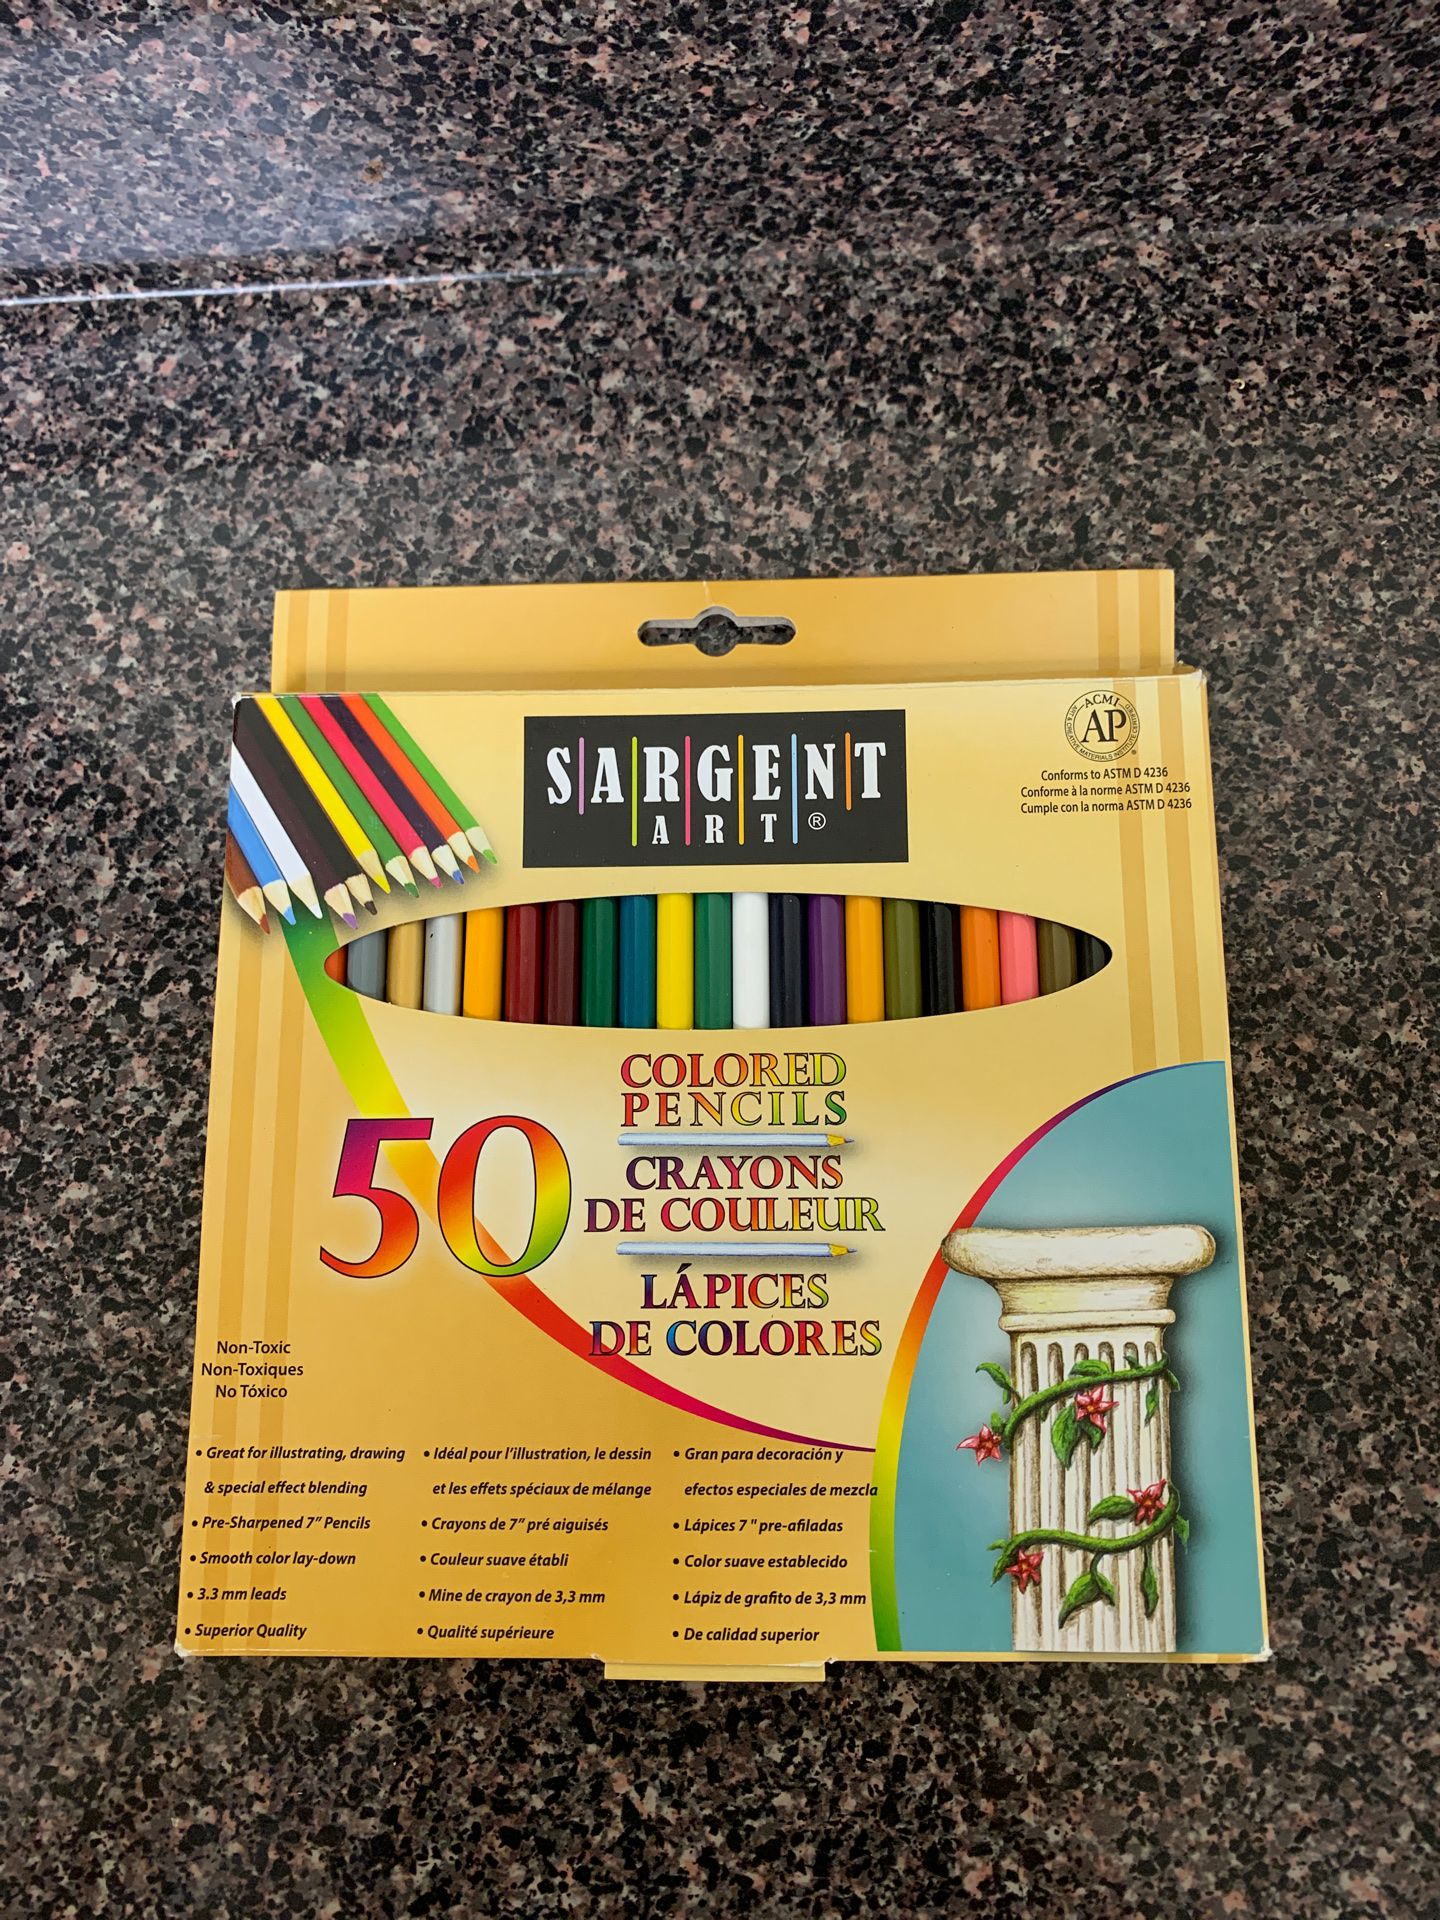 New 50 colored pencils